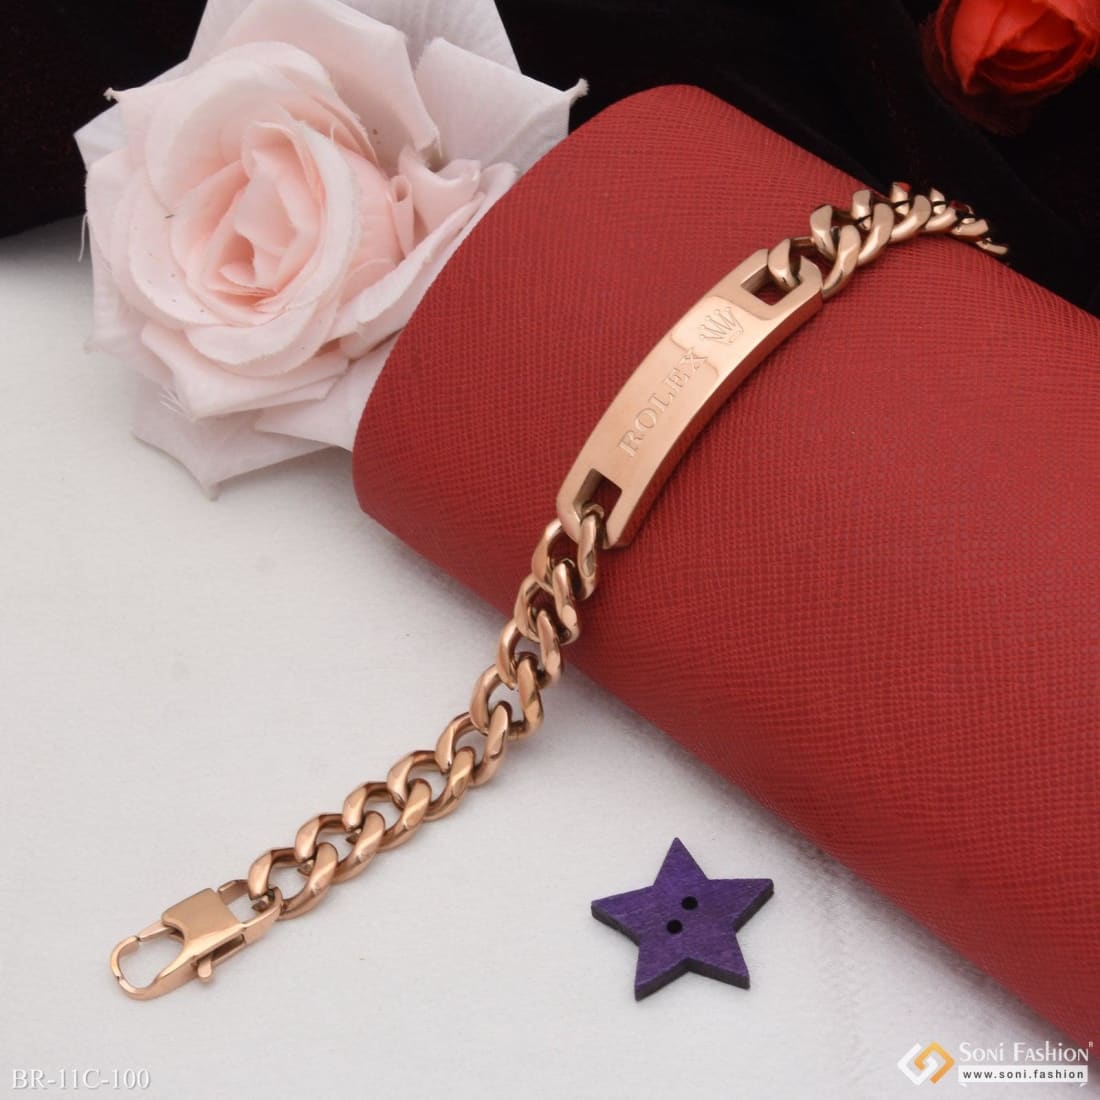 Buy quality 18kt / 750 rose gold fancy diamond bracelet 8brc50 in Pune